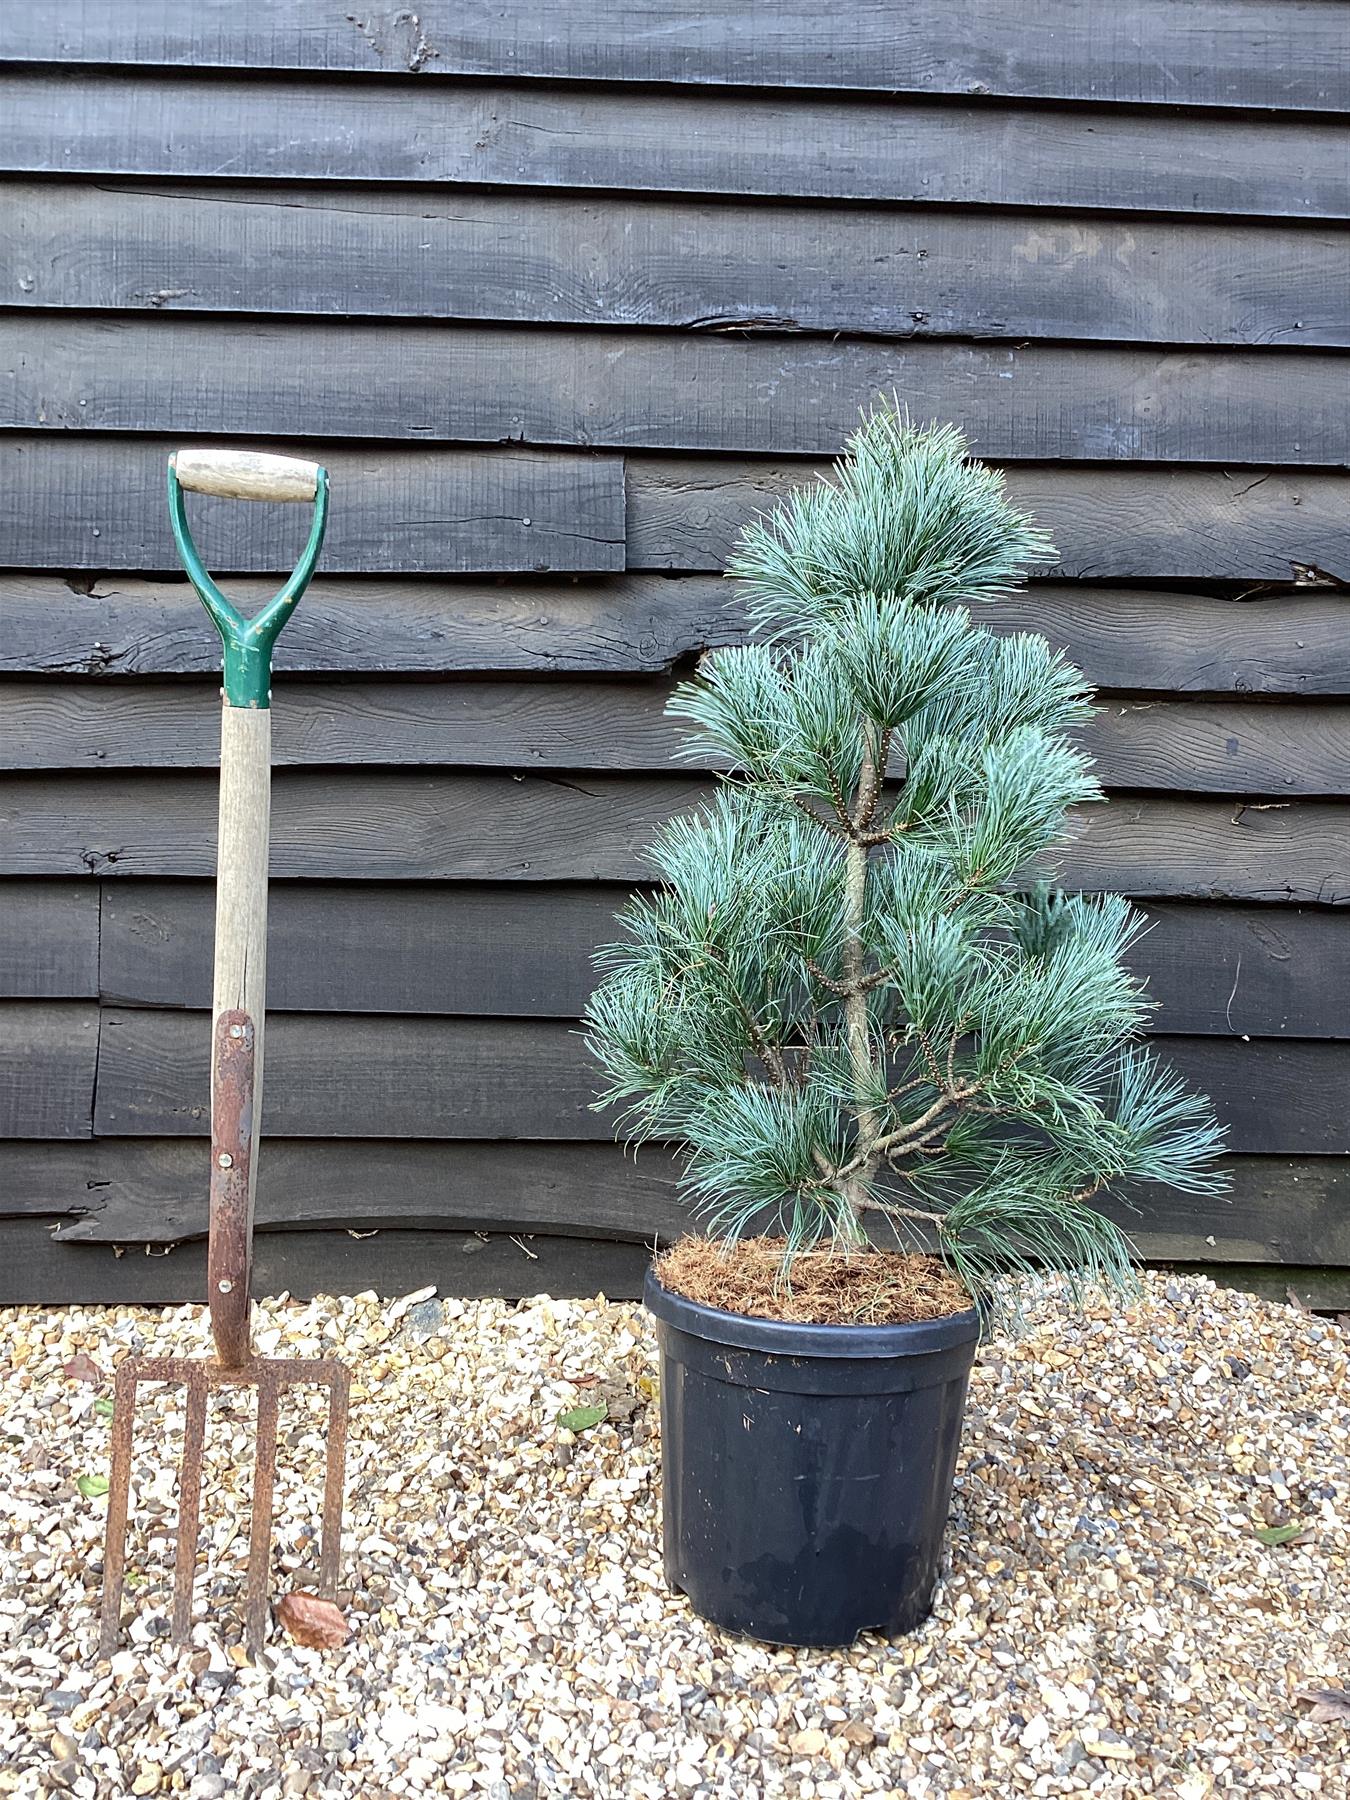 Pinus koraiensis 'Silveray' | Silveray Korean Pine - Height 90cm - Width 70-80cm - 18lt